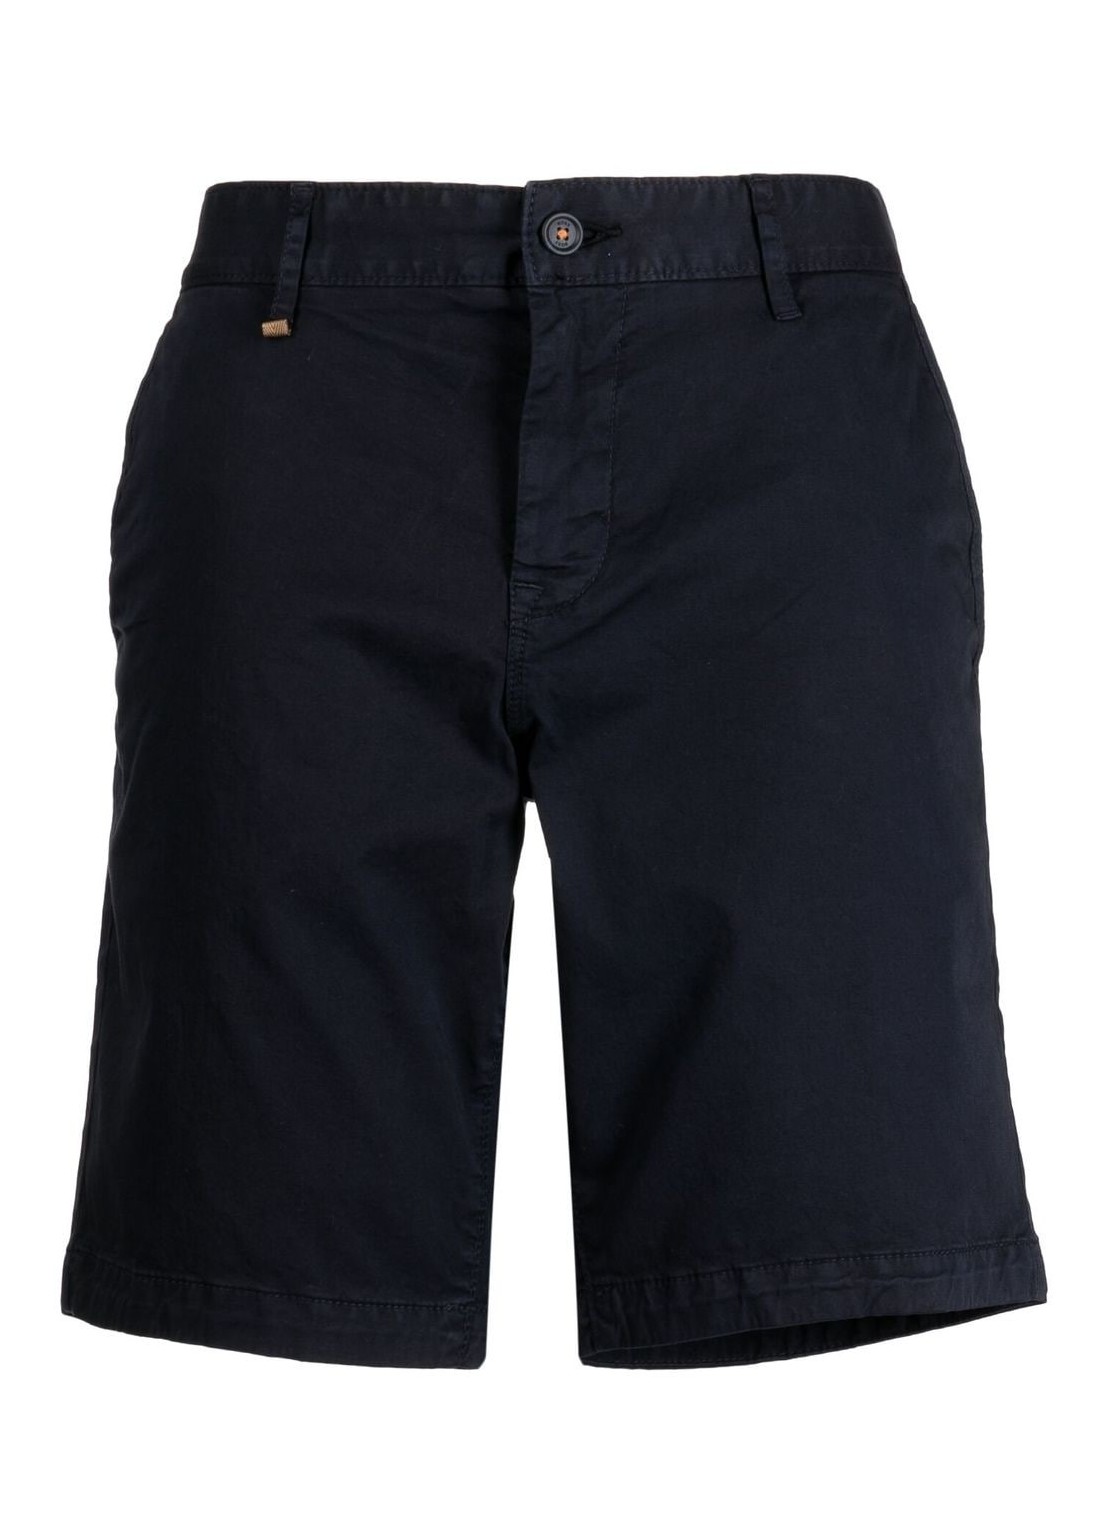 Pantalon corto boss short pant man schino-slim-short st 50489112 404 talla Azul
 